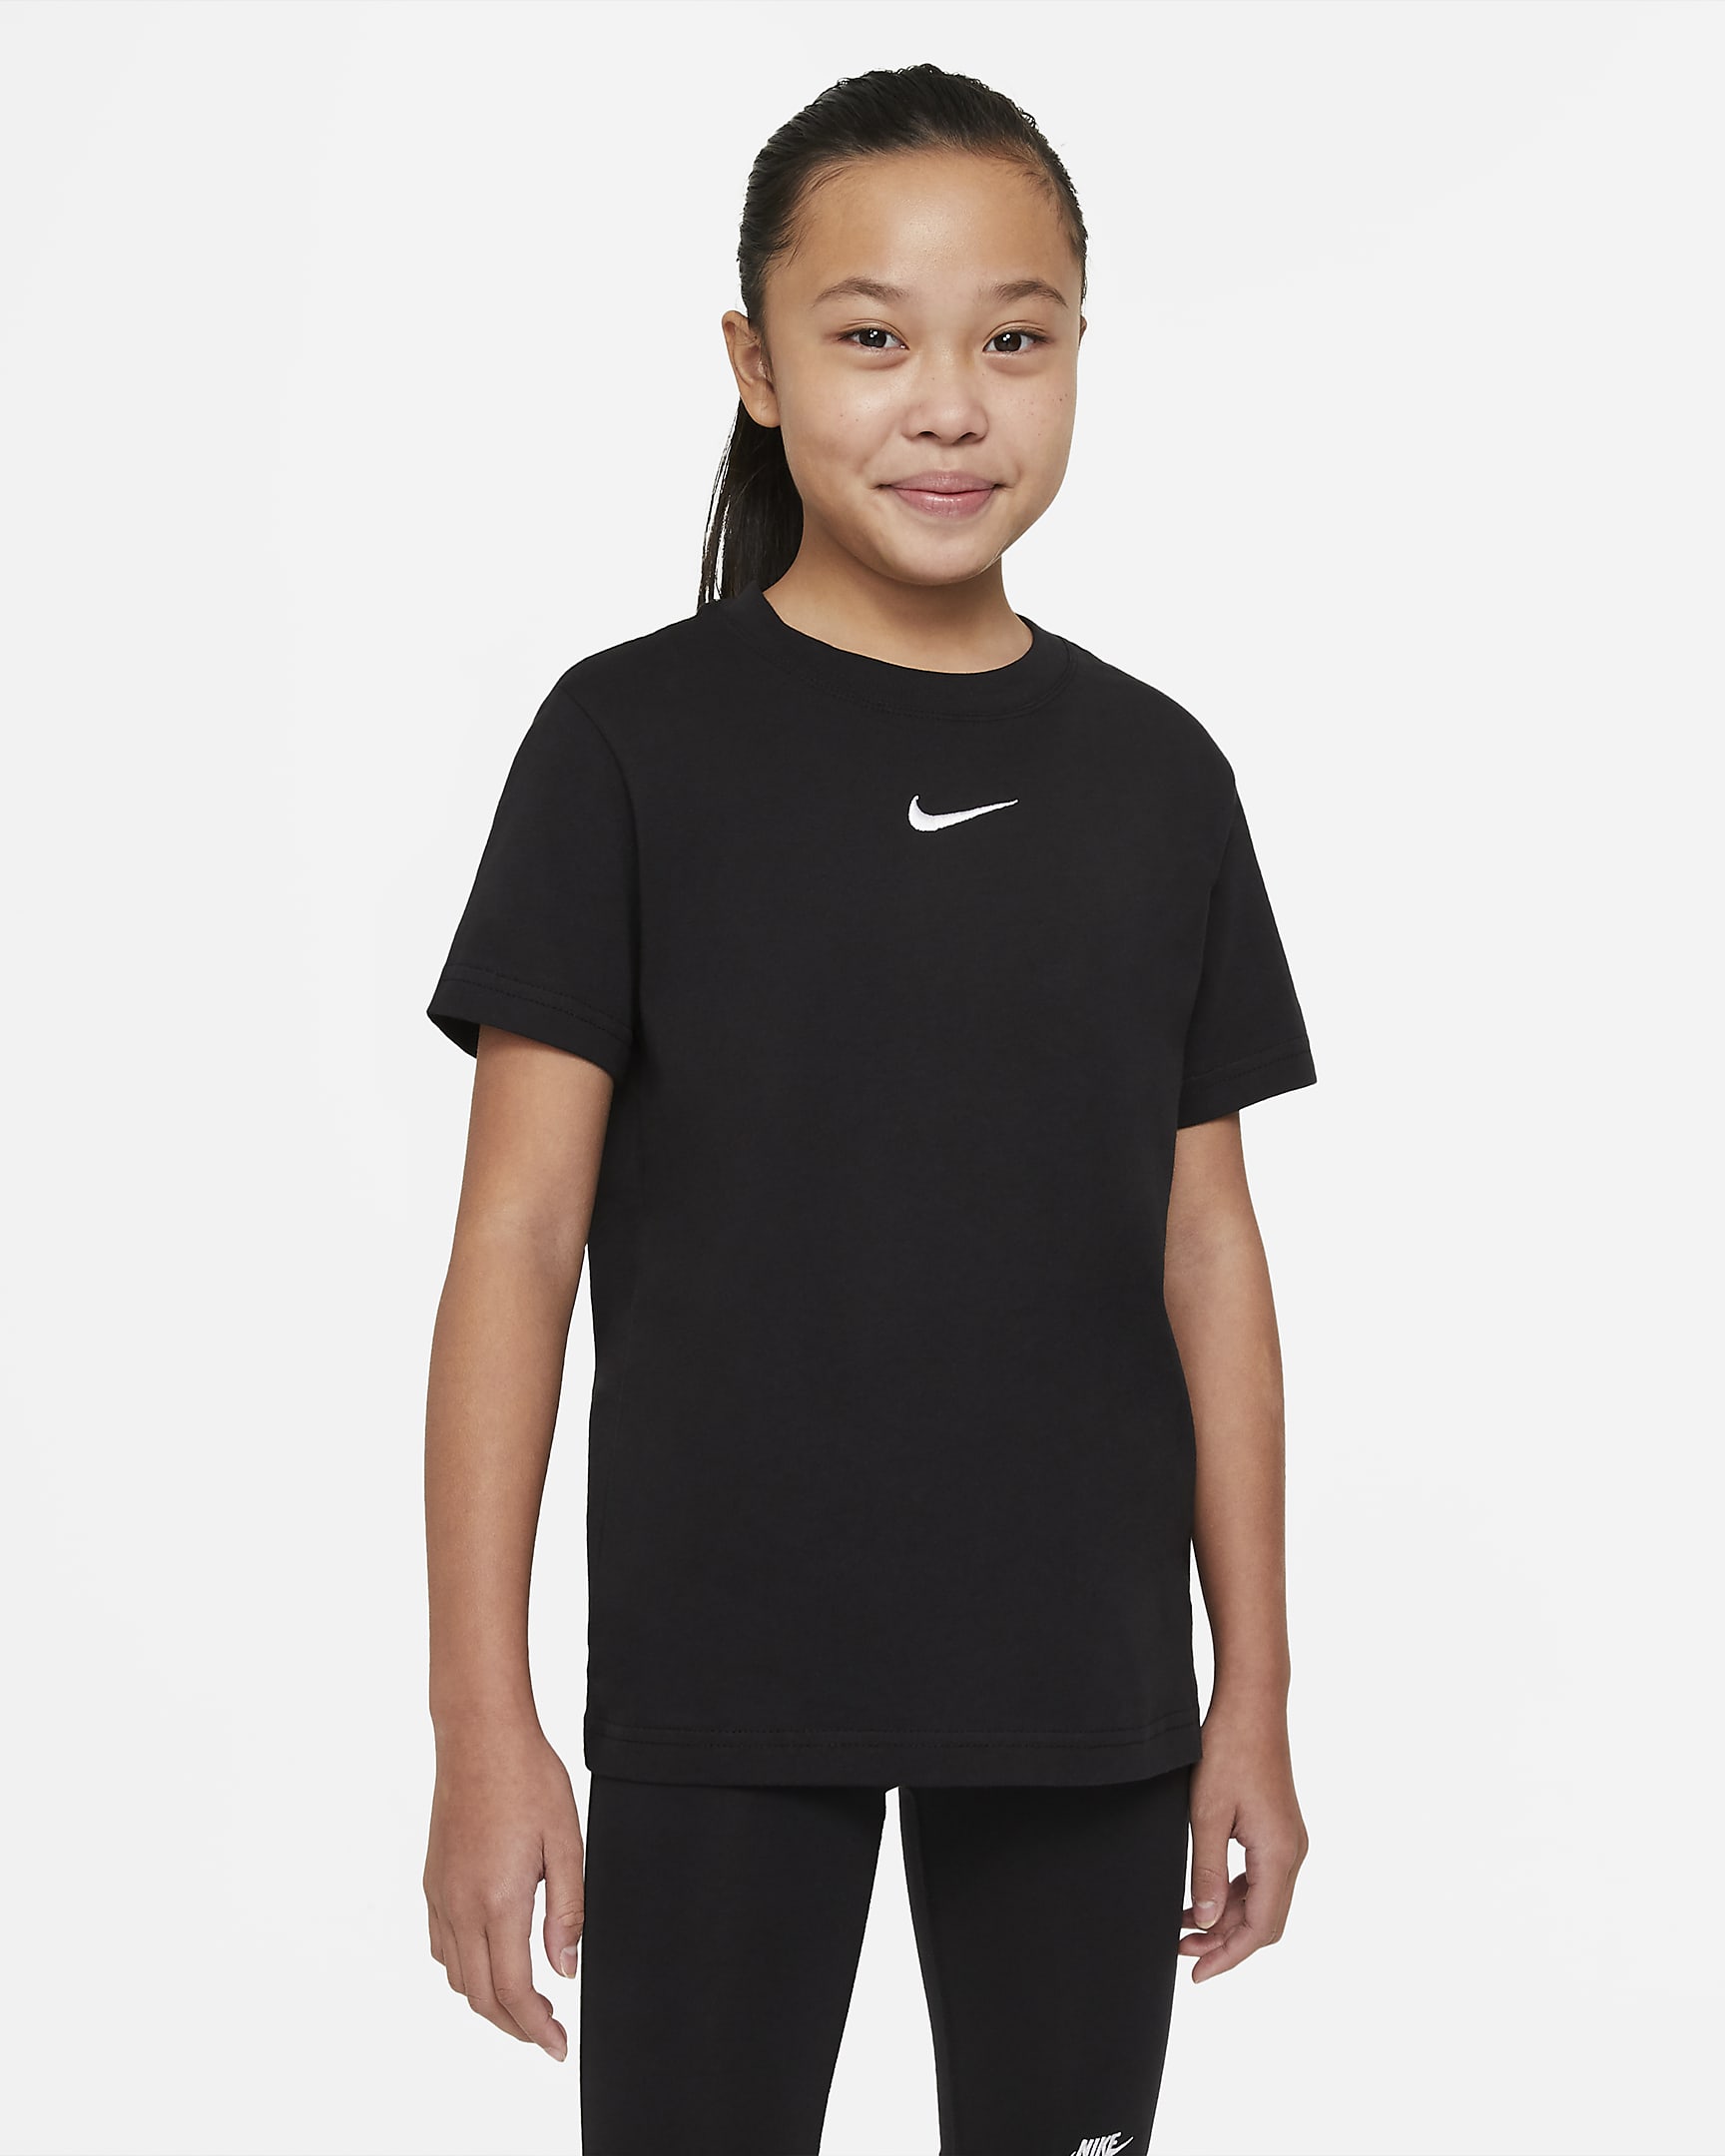 Nike Sportswear Older Kids' (Girls') T-Shirt - Black/White